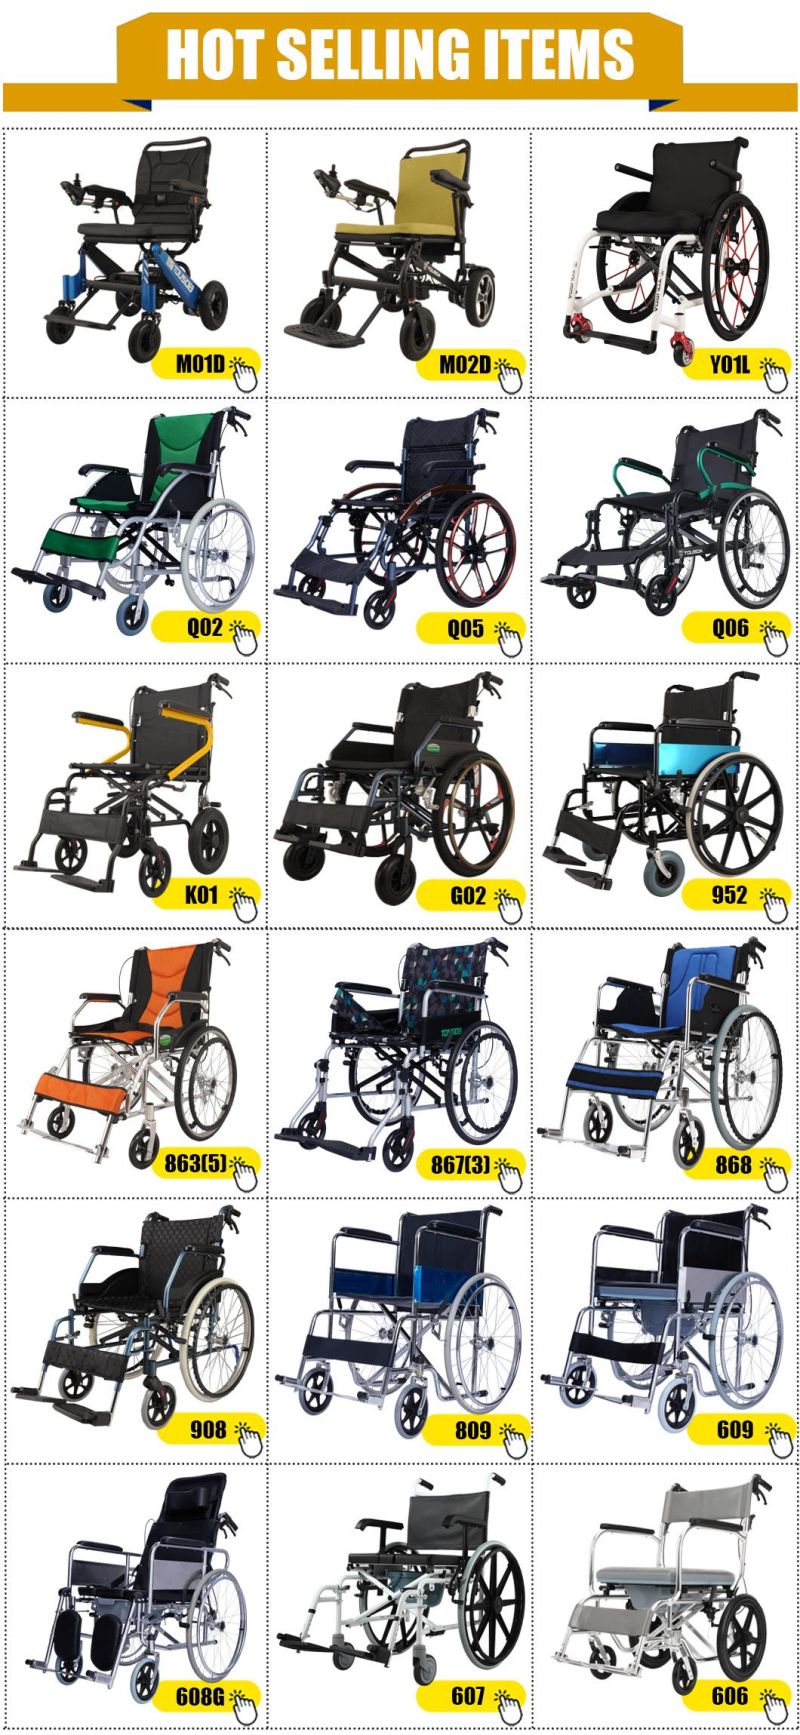 Aluminum Frame Standard Size Folding Basketball Disabled Motor Electric Wheelchair